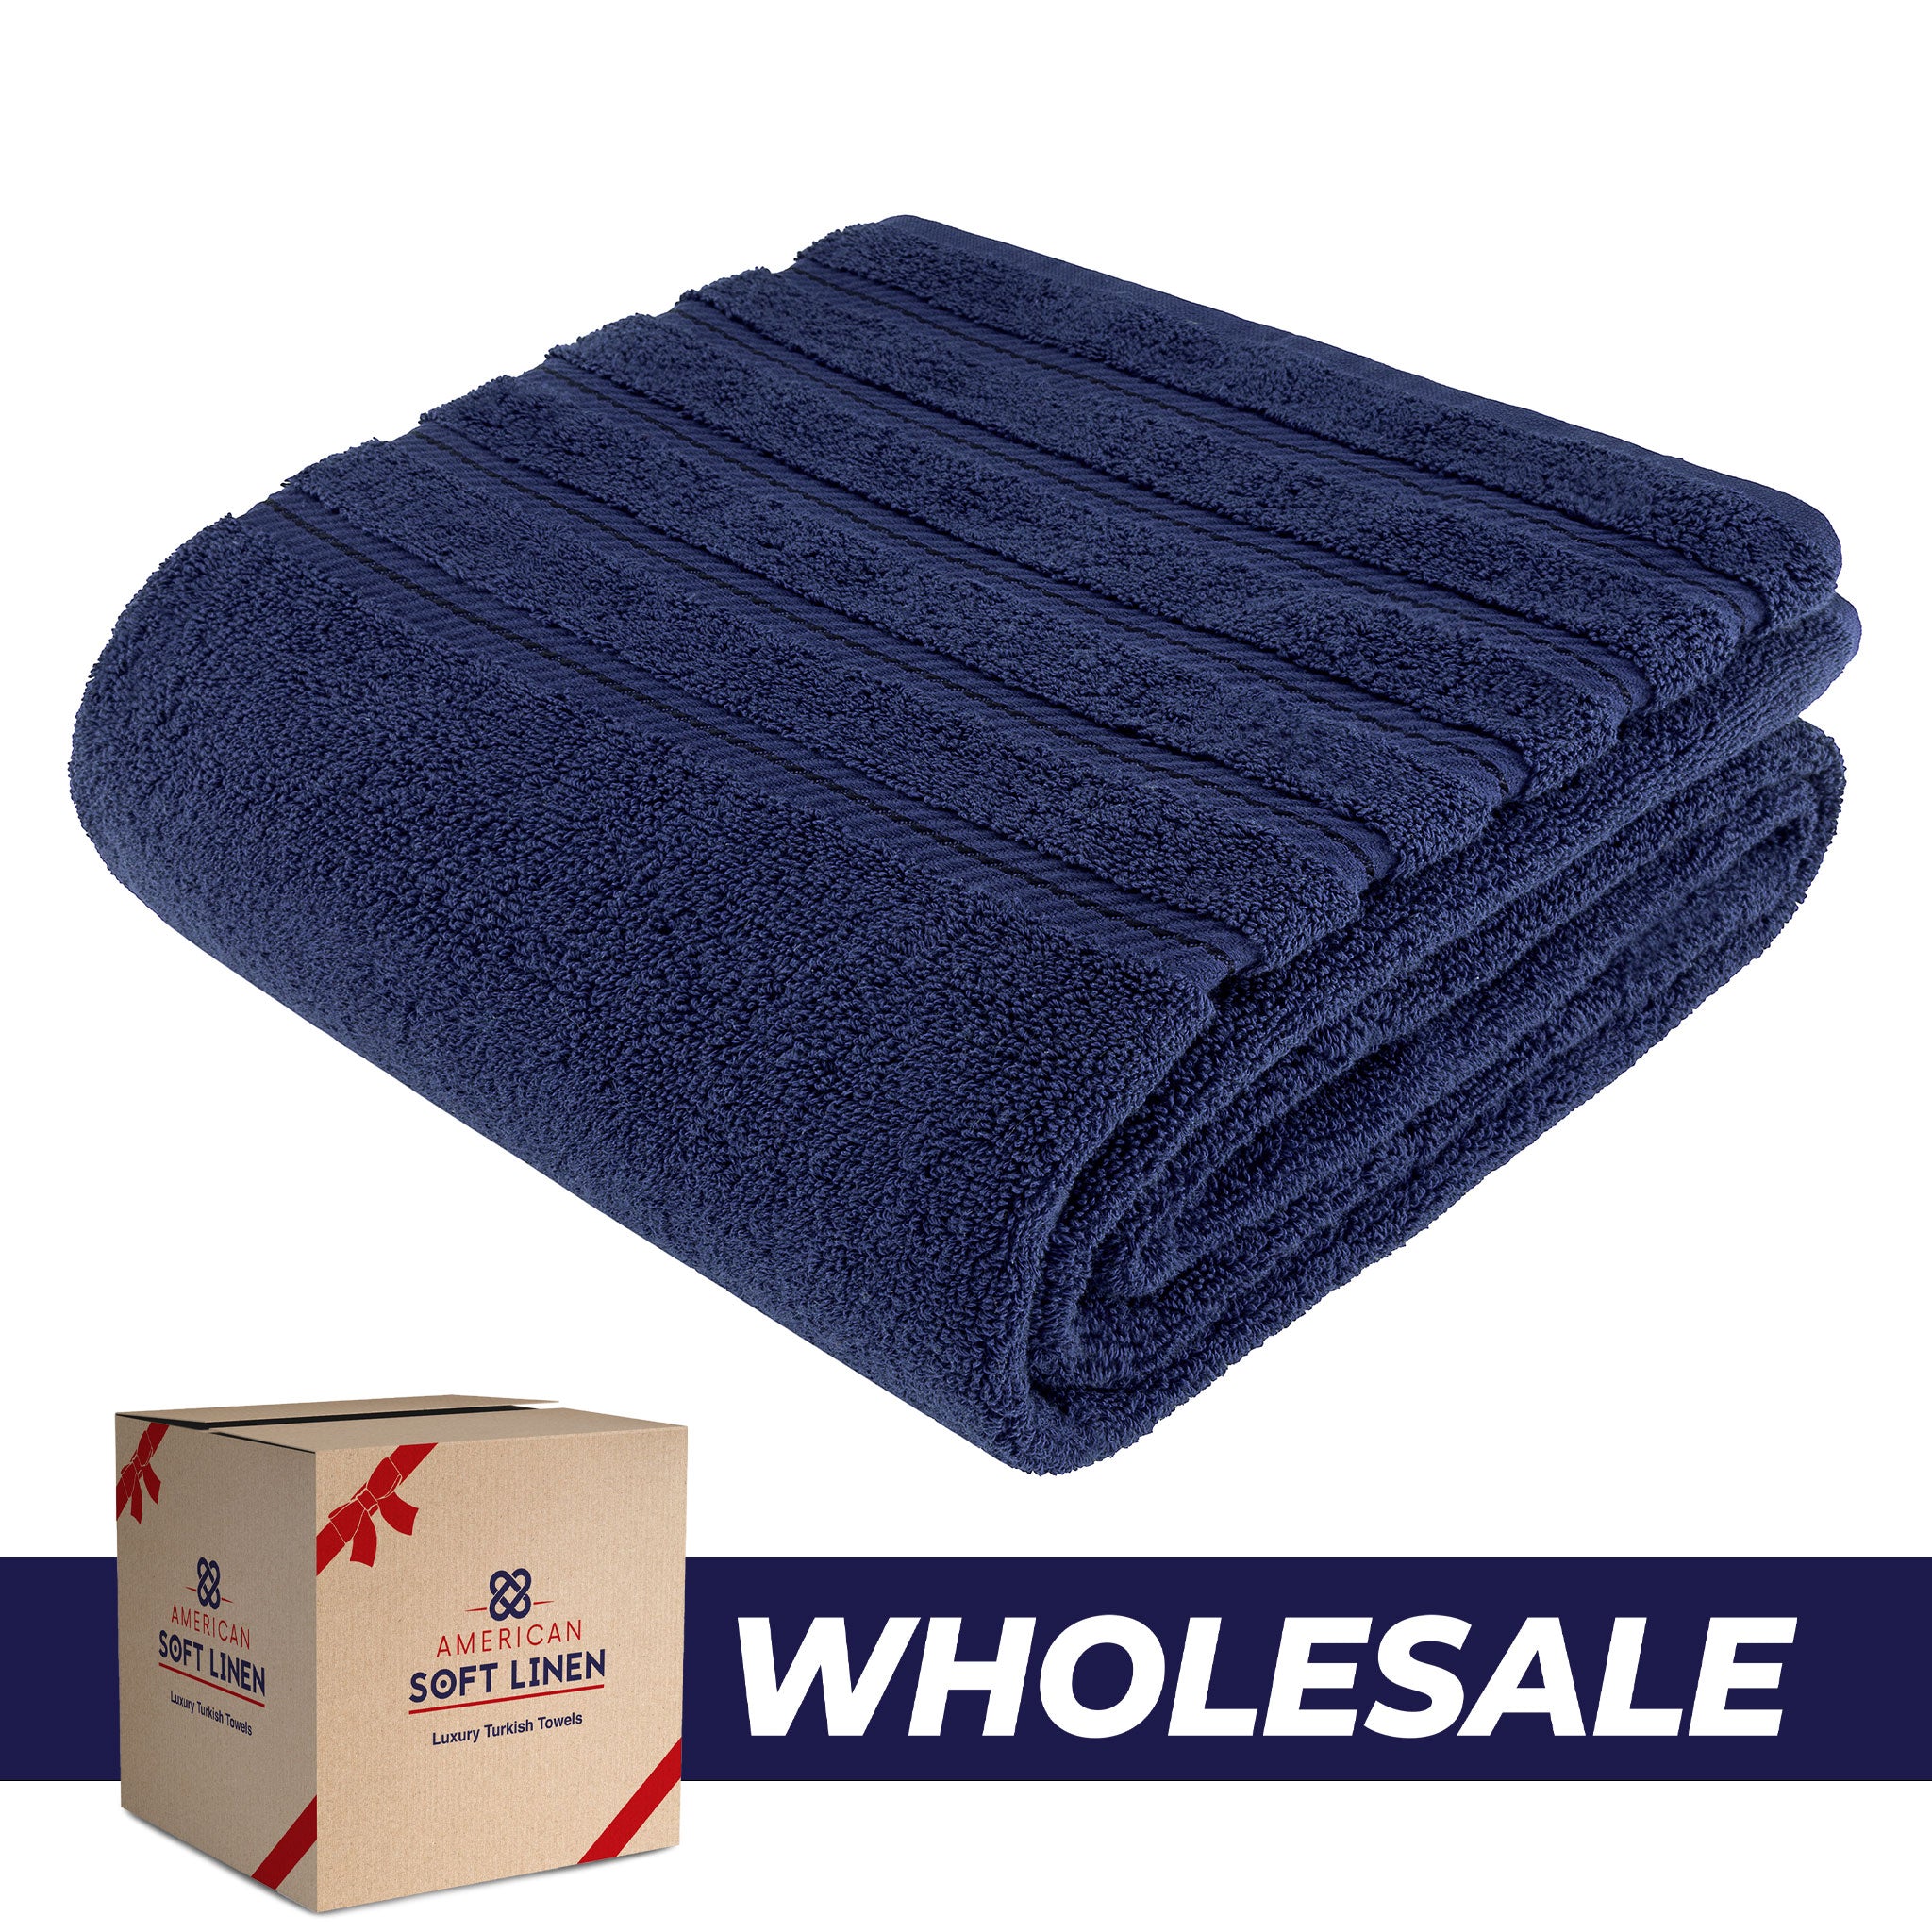 American Soft Linen - 35x70 Jumbo Bath Sheet Turkish Bath Towel - 16 Piece Case Pack - Navy-Blue - 0